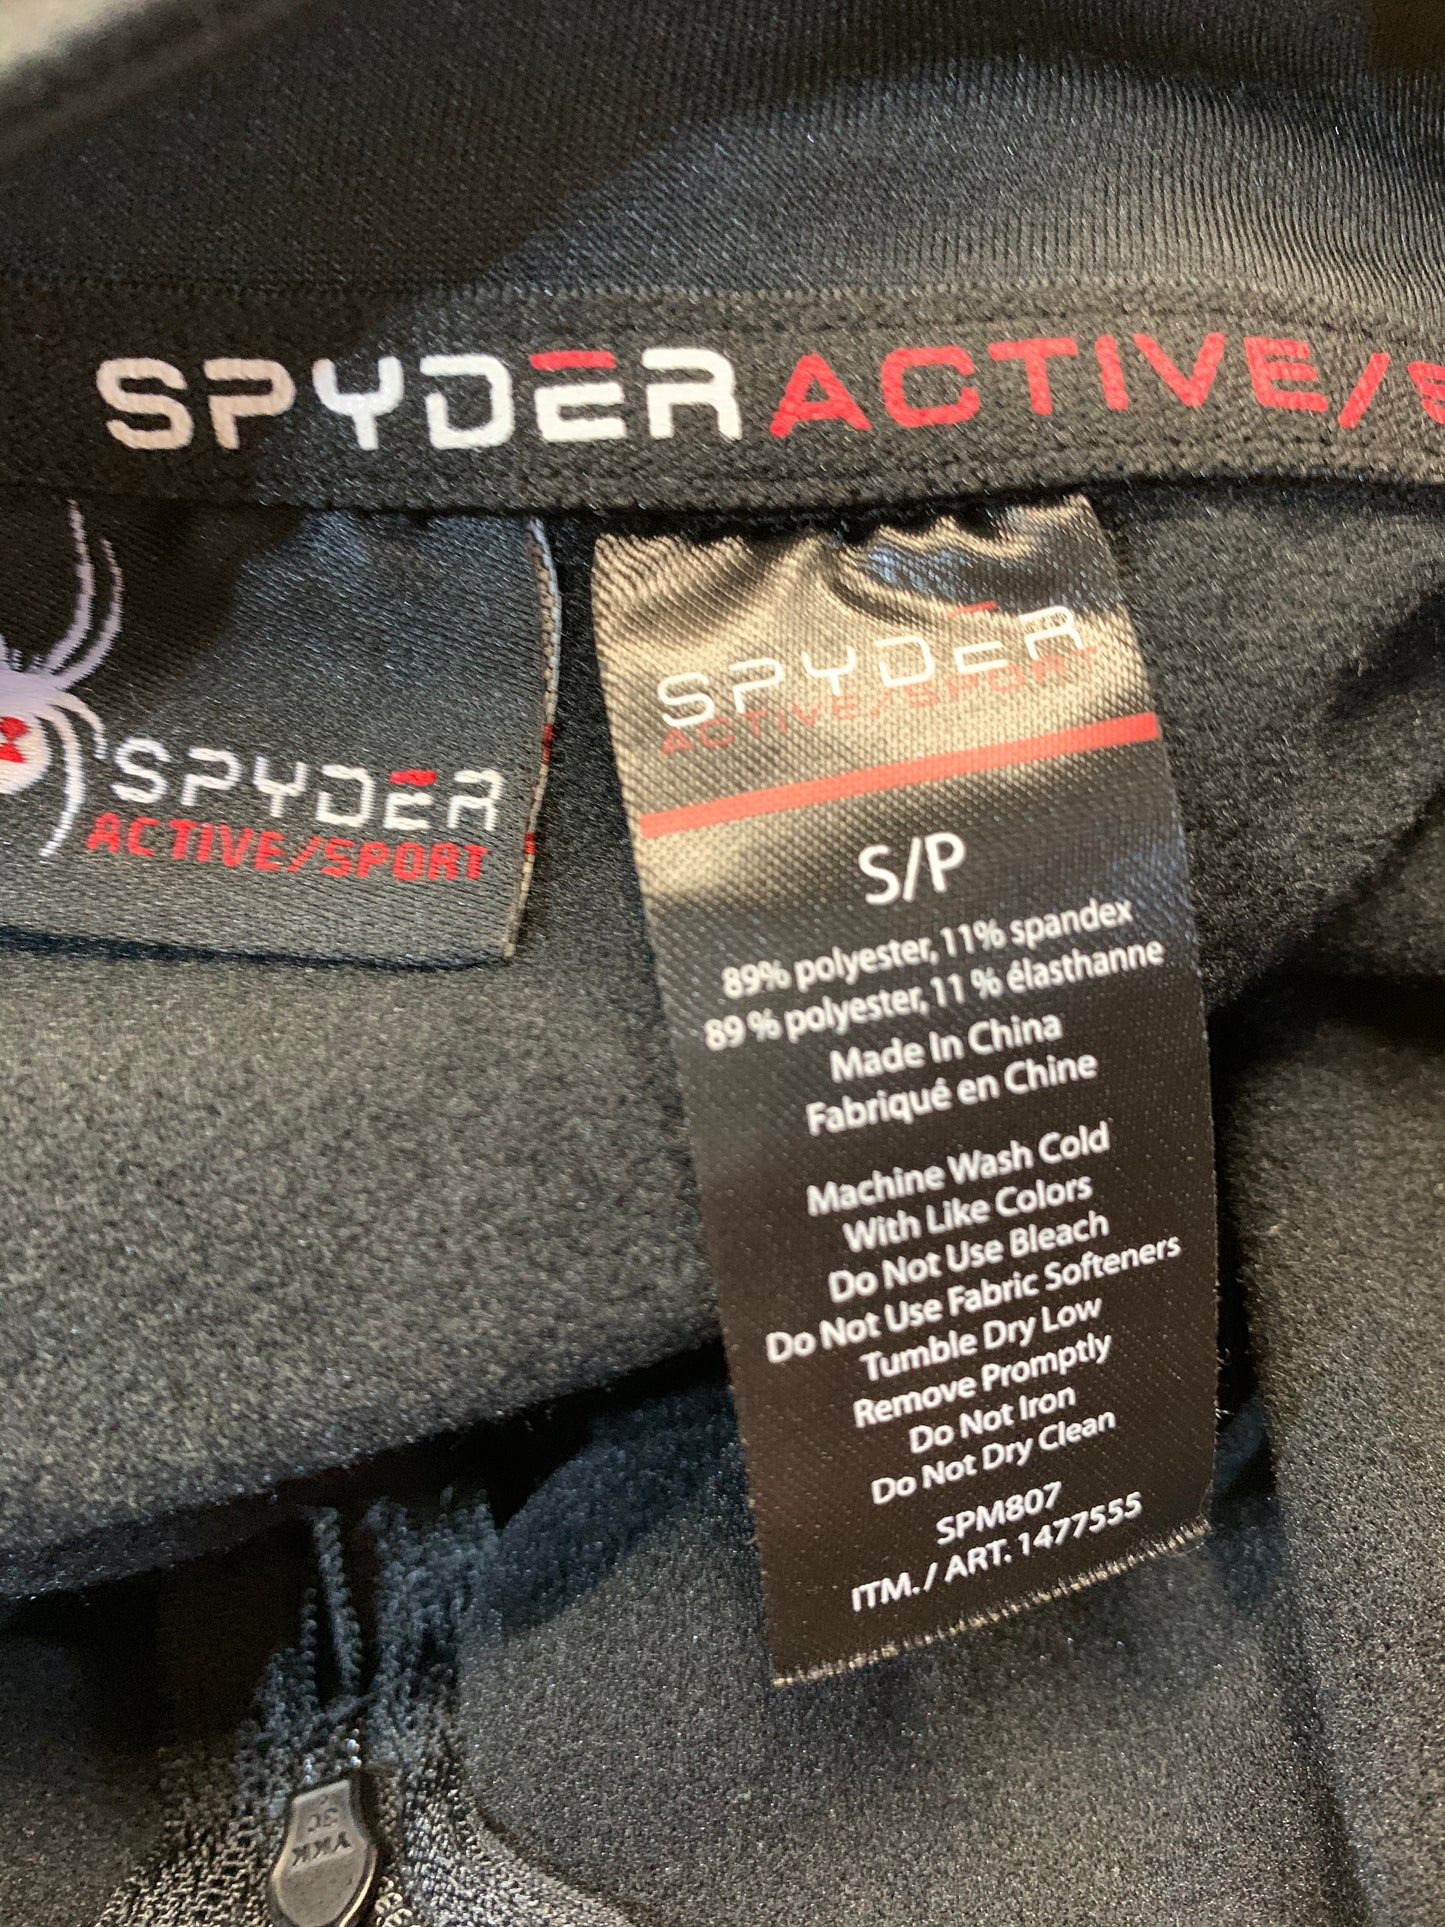 Spyder Active  long sleeve quarter zip Top - small